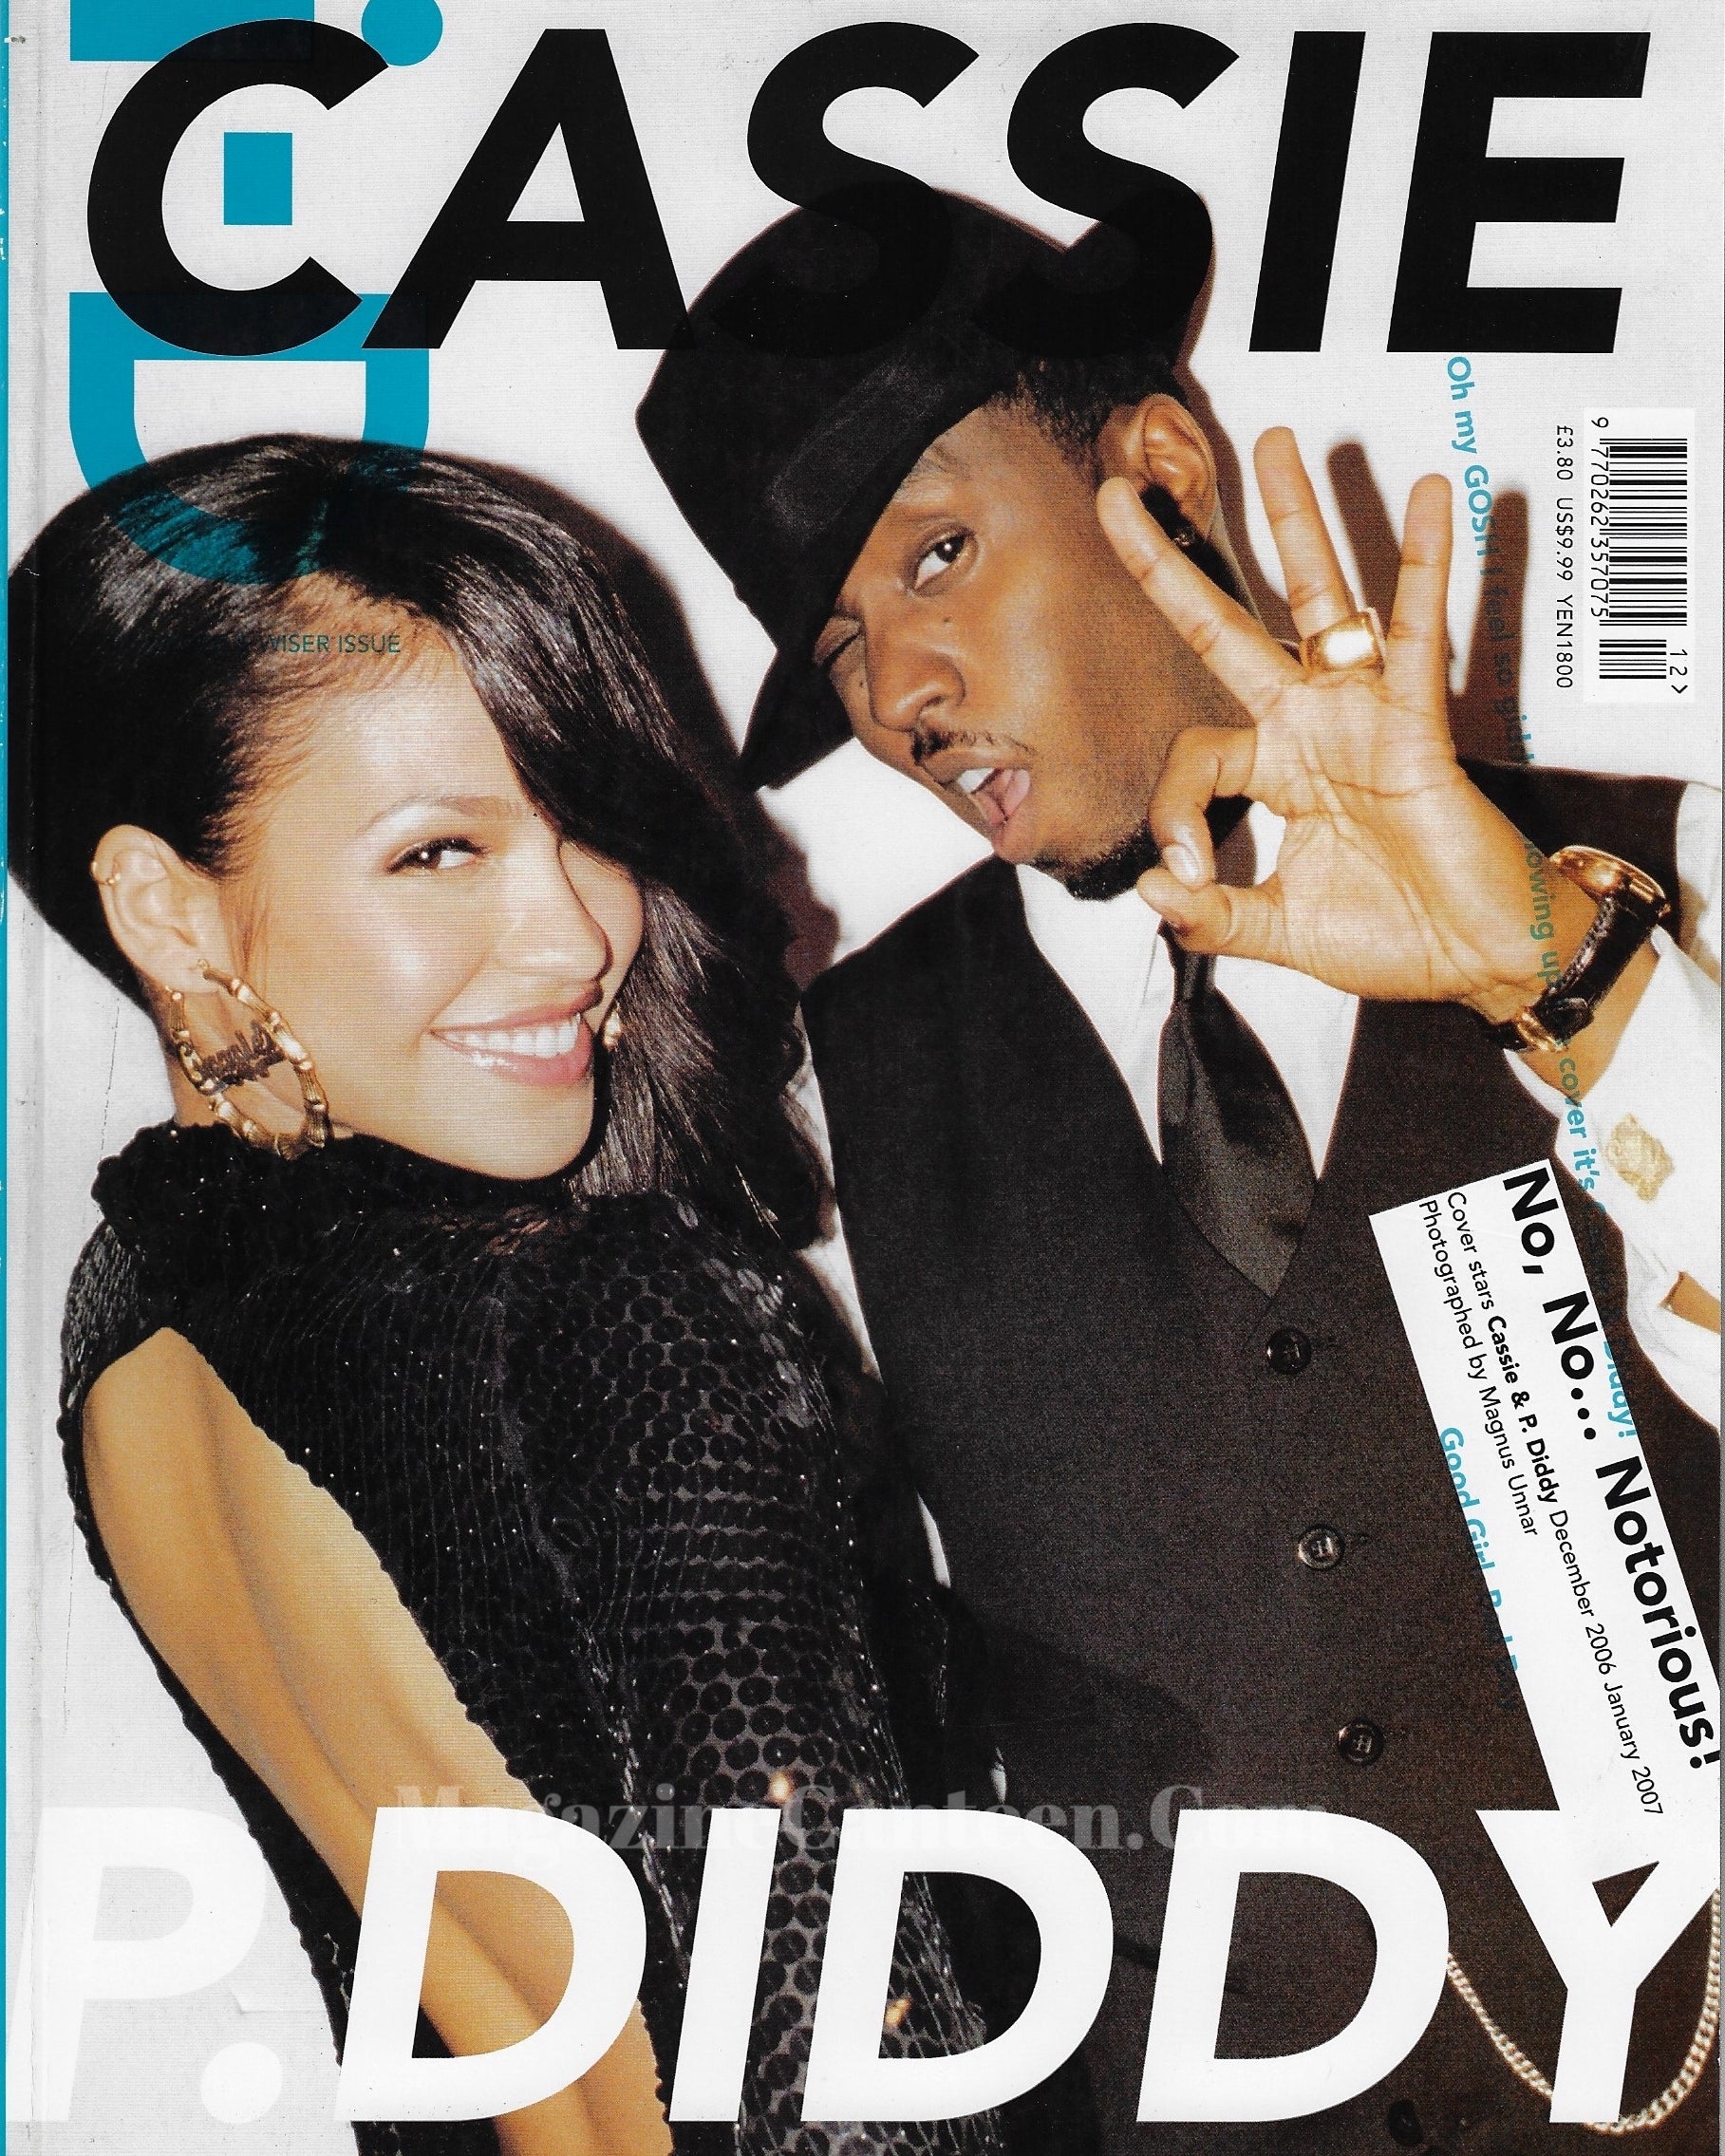 I-D Magazine 272 - Puff Daddy 2006